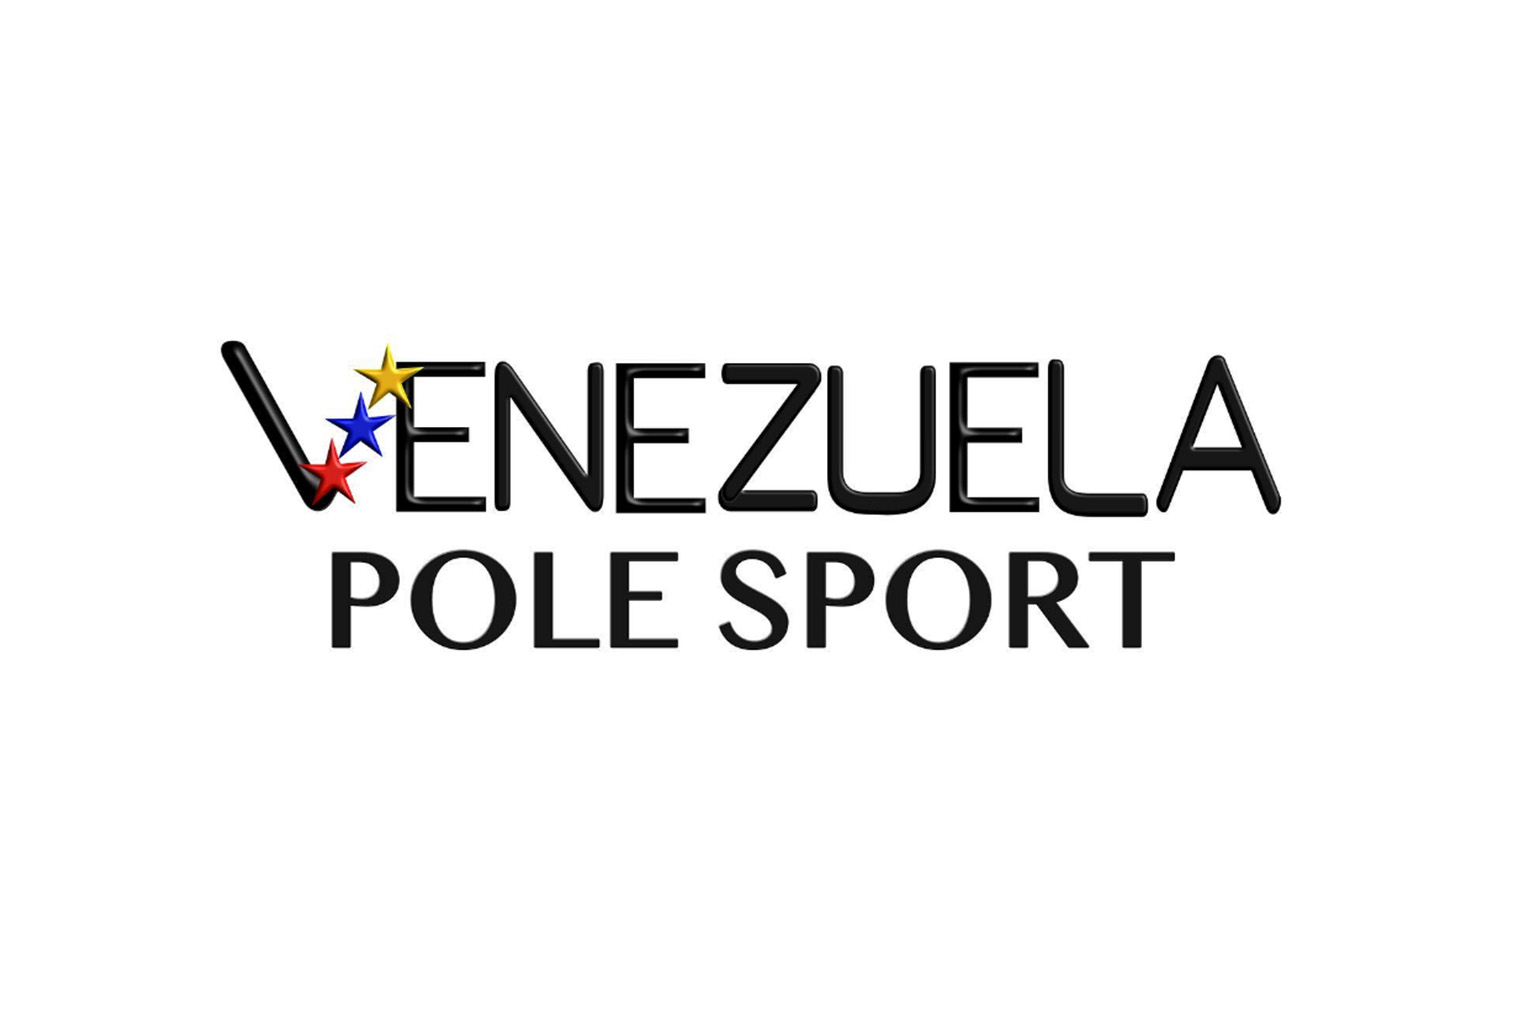 venezuela pole sport